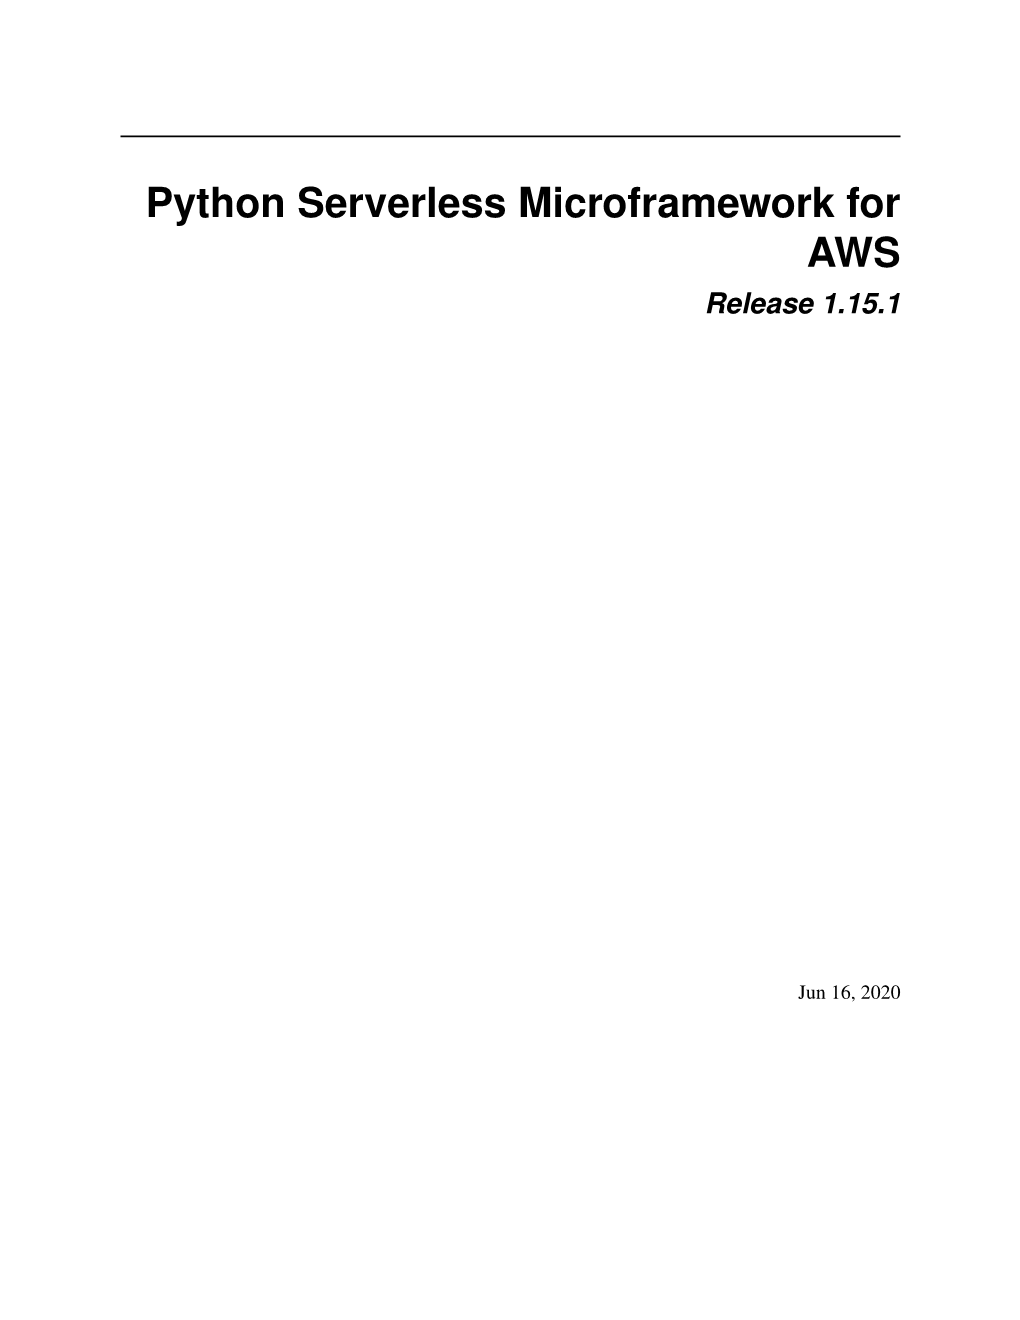 Python Serverless Microframework for AWS Release 1.15.1